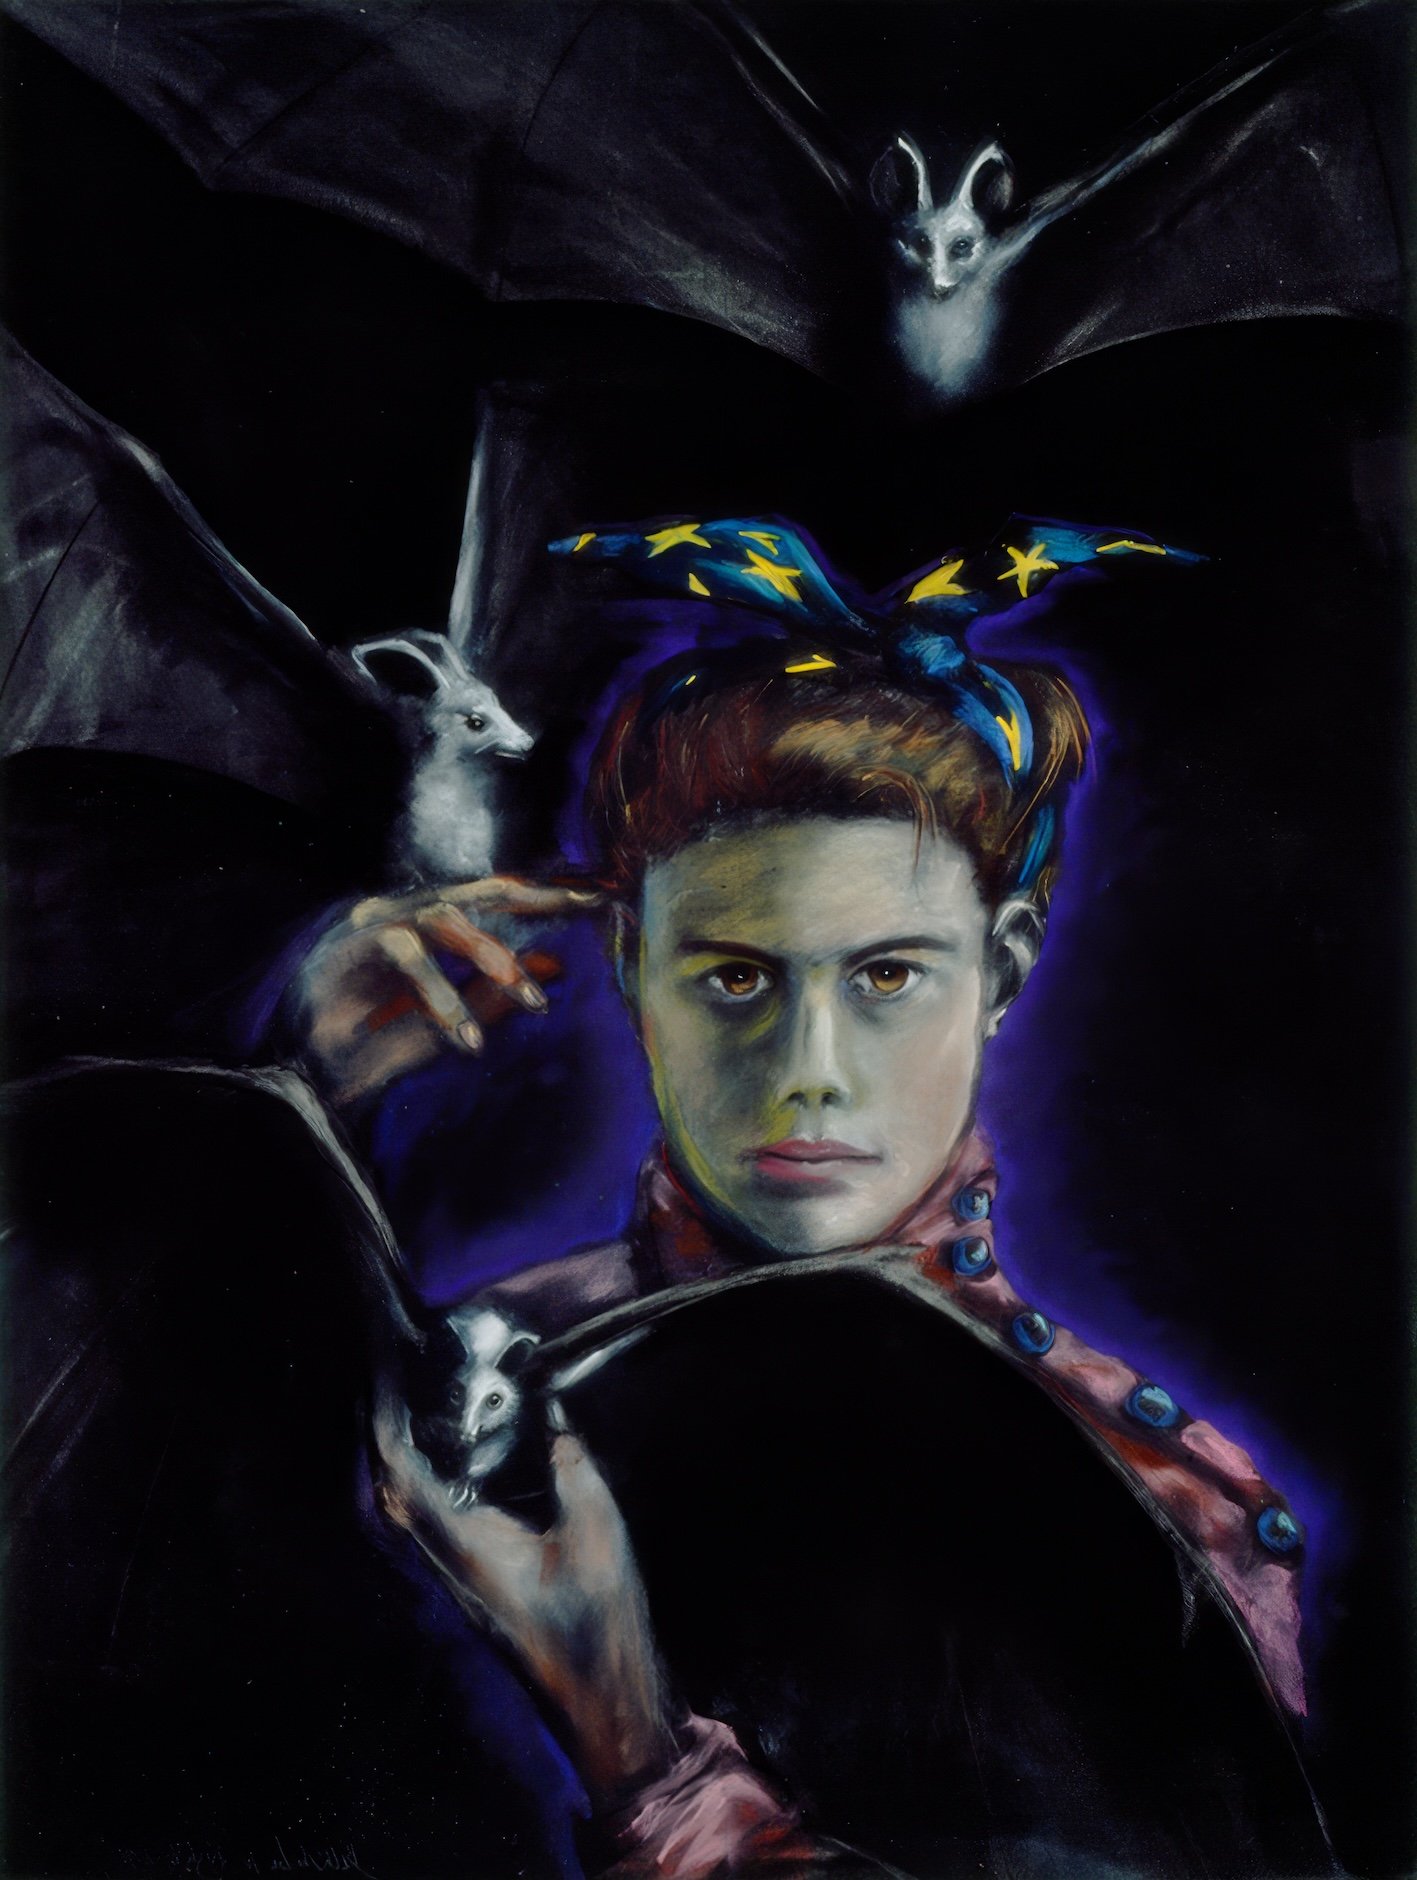  Self Portrait with Bats  50” x 38”, pastel on paper  1991   